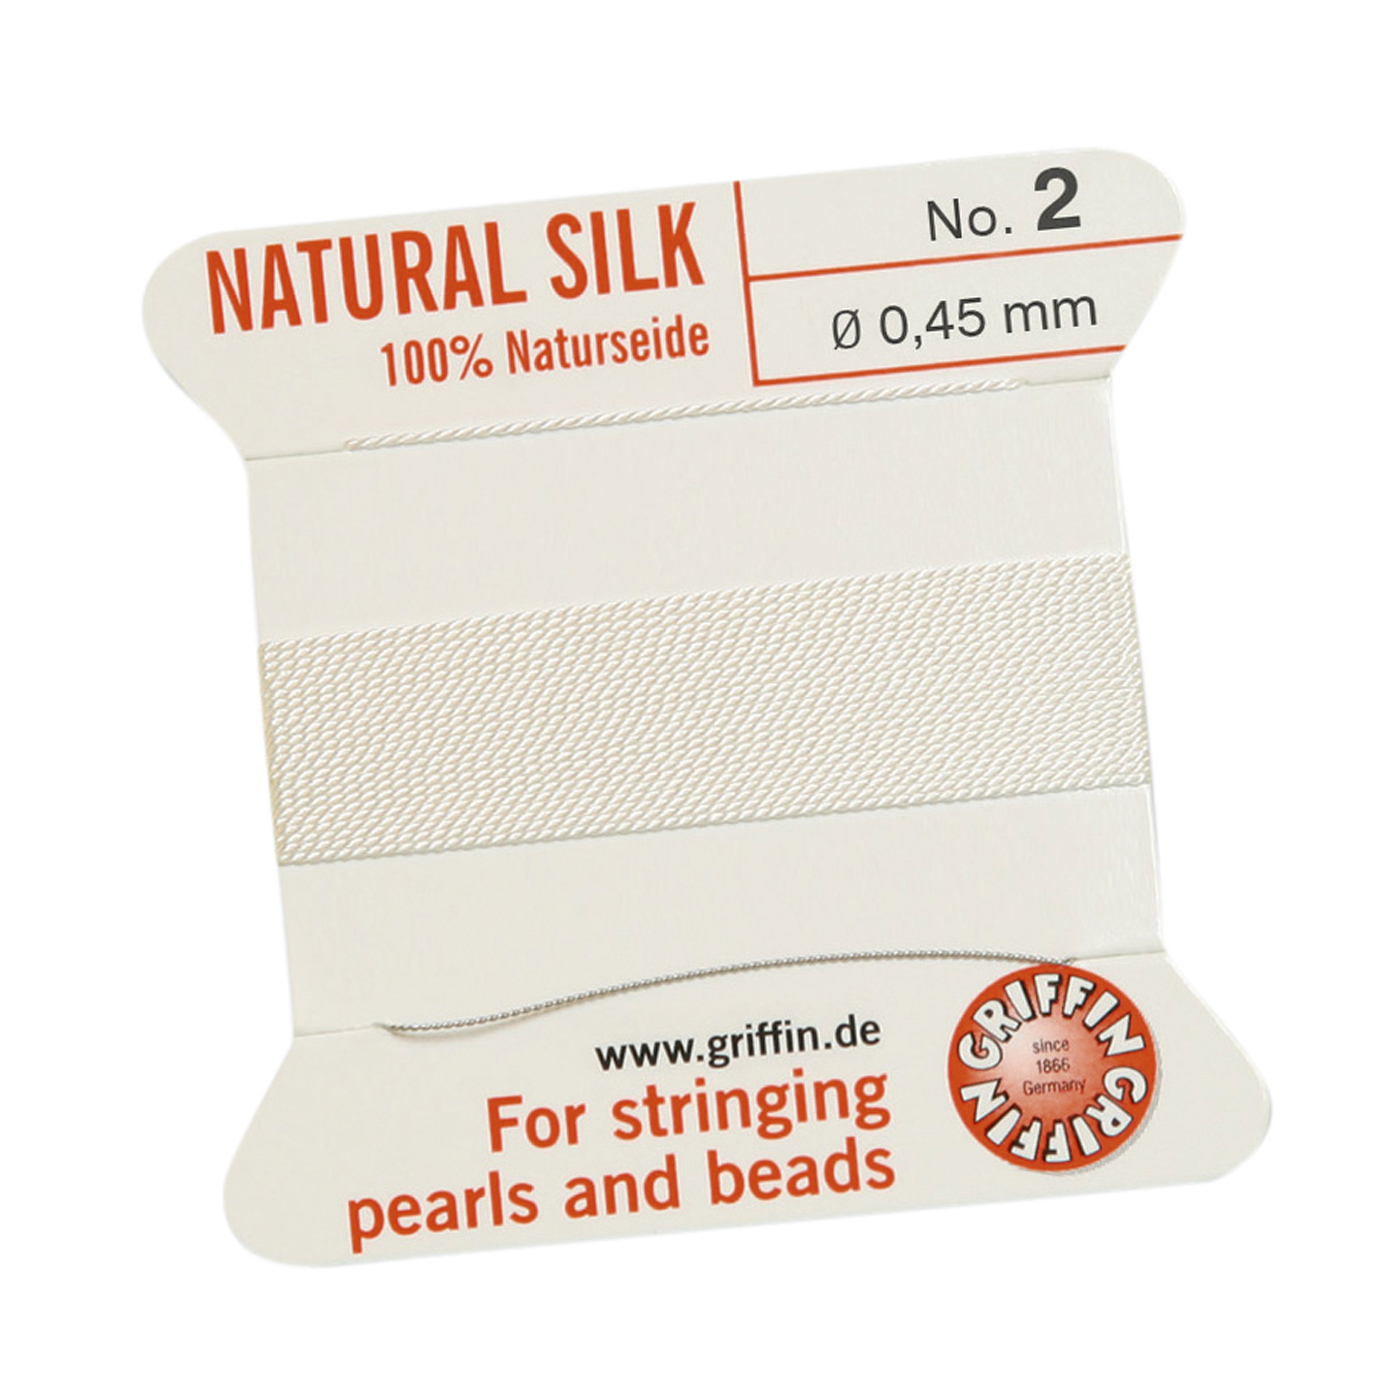 Bead Cord 100% Natural Silk, White, No. 2 - 2 m